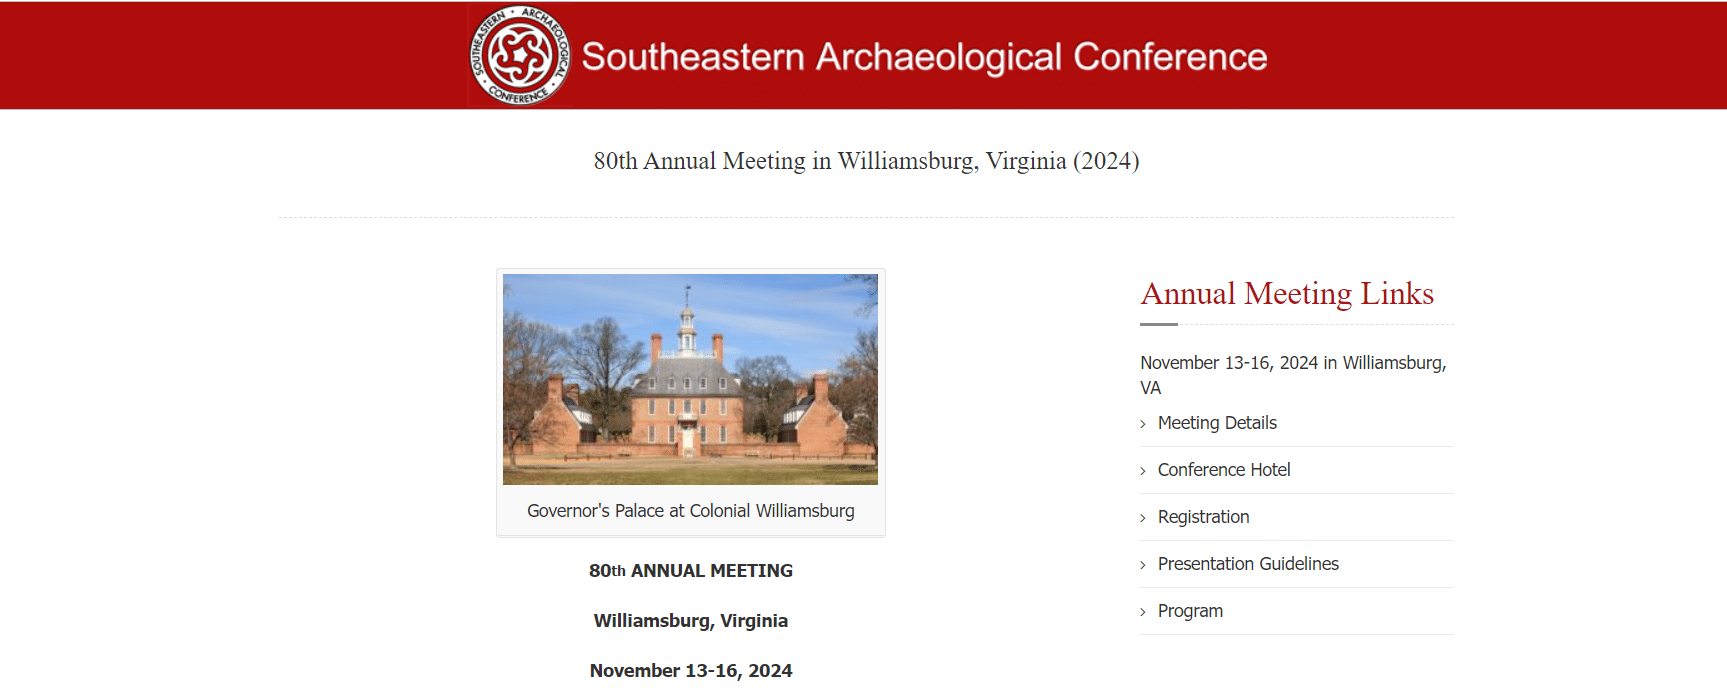 Annual Meeting in Williamsburg, Virginia (2024)